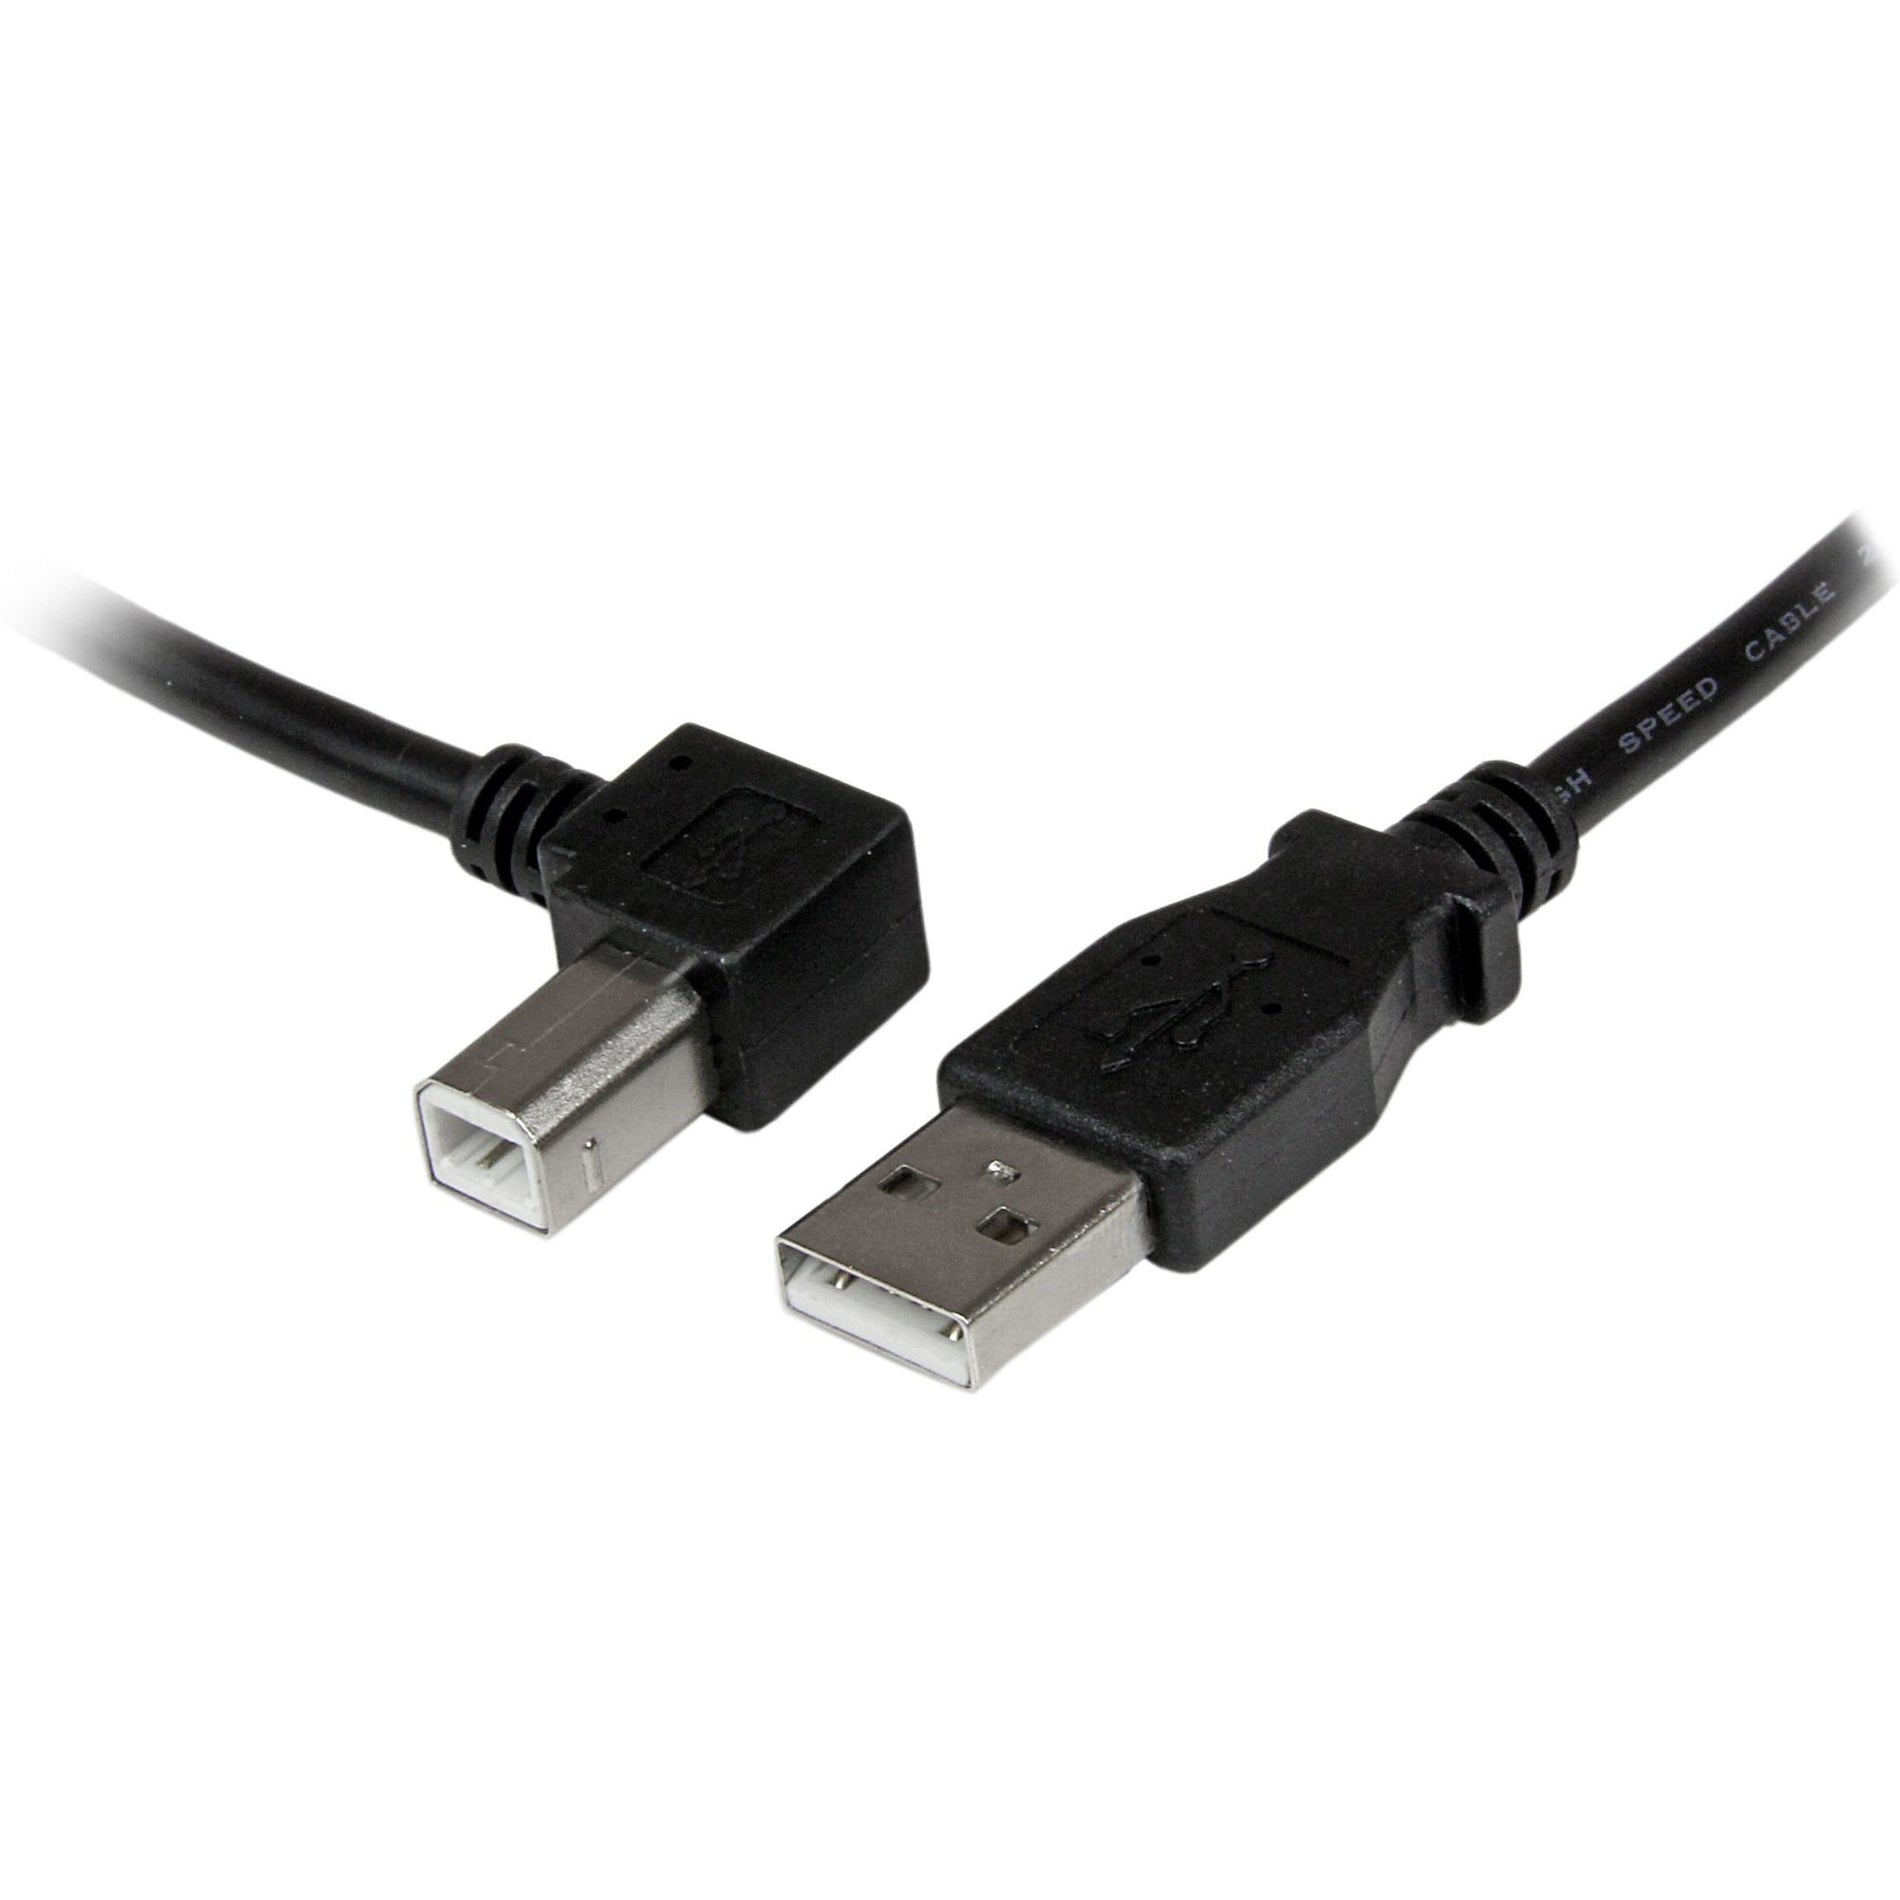 StarTech.com USBAB3ML 3m USB 2.0 A to Left Angle B Cable - M/M 9.84 ft Data Transfer Cable  スタートレック・ドットコム USBAB3ML 3メートル USB 2.0 A to 左角度Bケーブル - M/M 9.84 フィート データ転送ケーブル